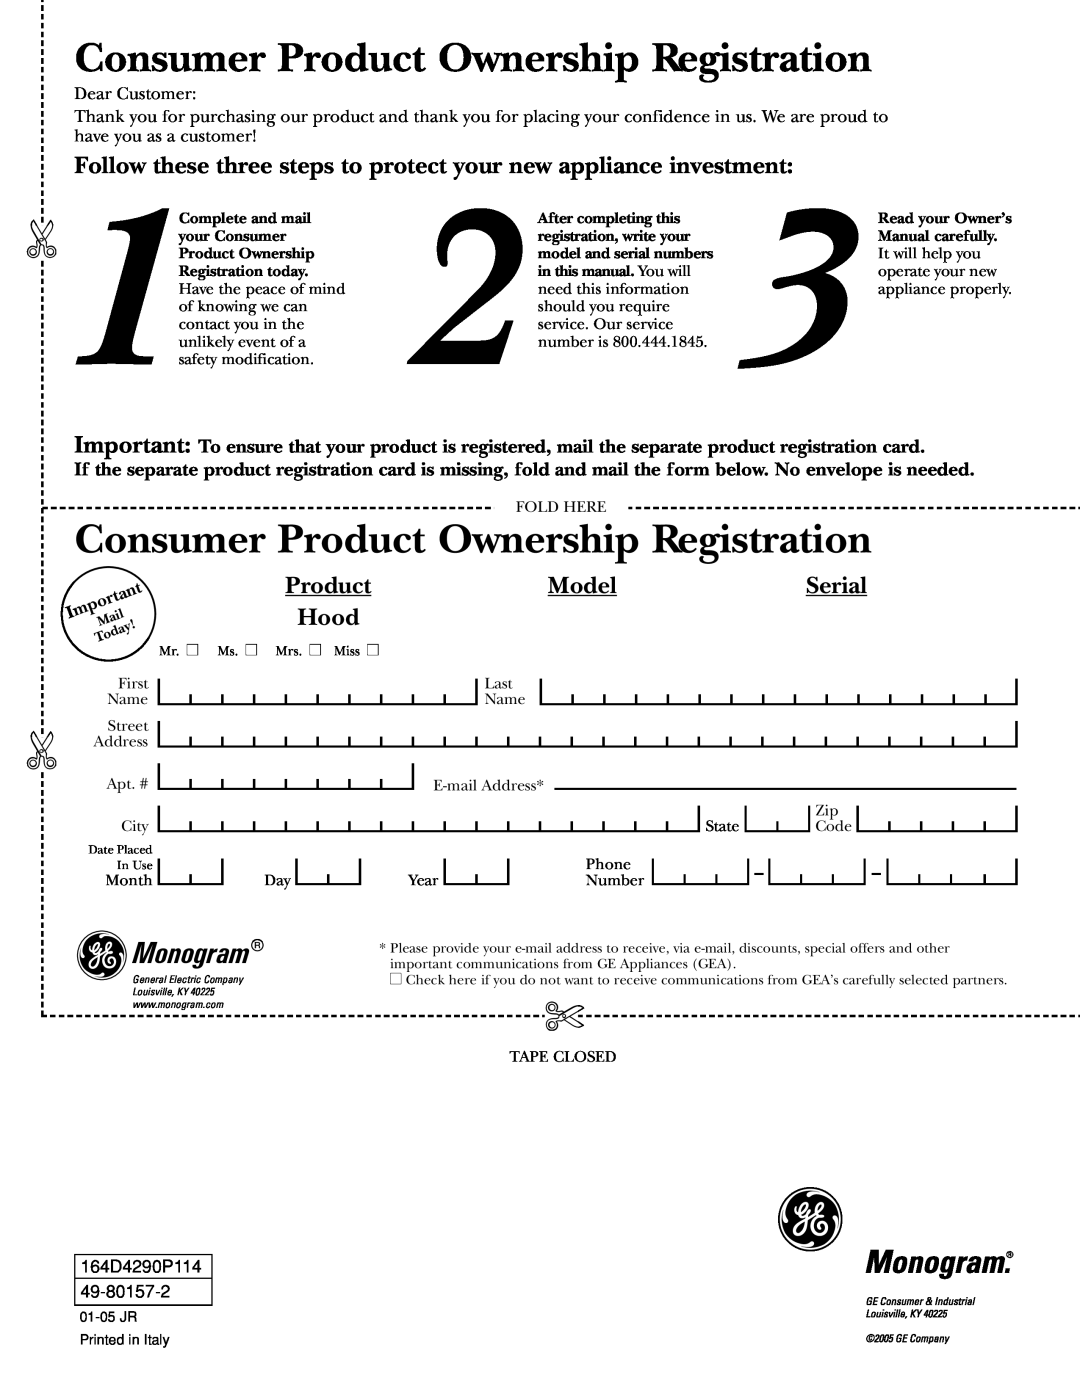 GE ZV1050, ZV950 owner manual Consumer Product Ownership Registration, Monogram, Model, Hood, Serial 